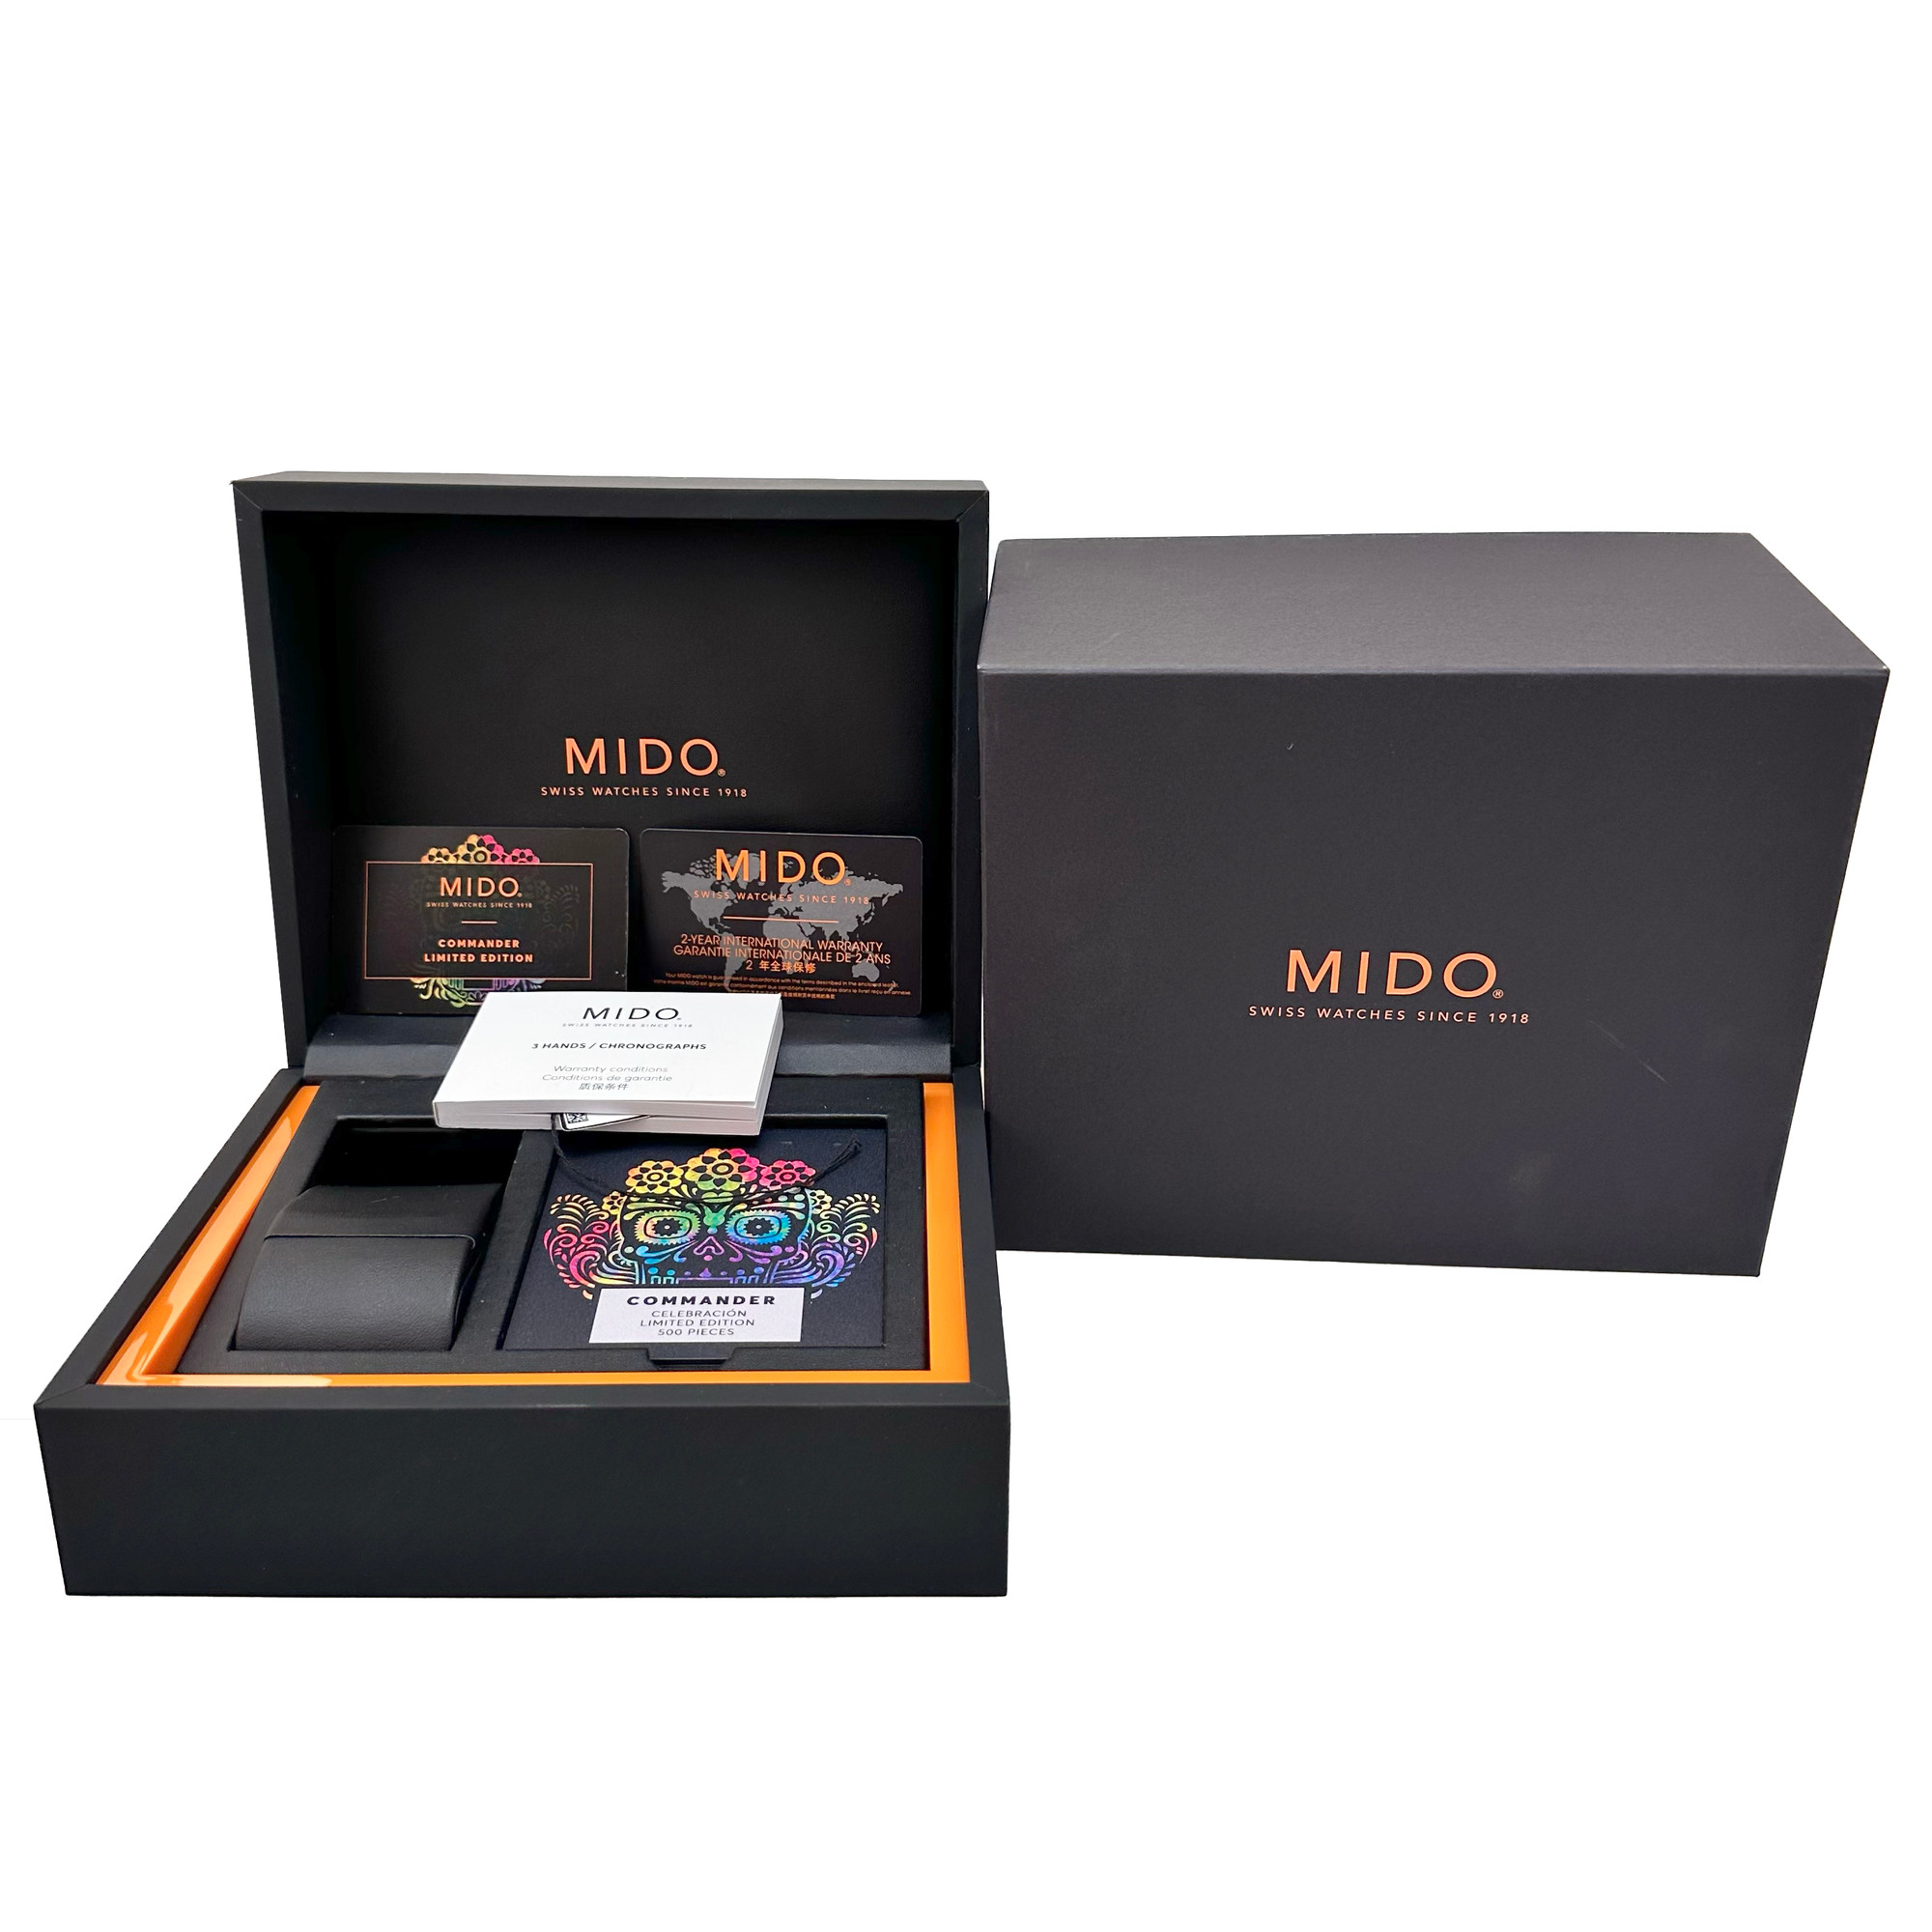 Mido Commander Big Date Celebracion Edition *Limited Edition* - Inventory 4161